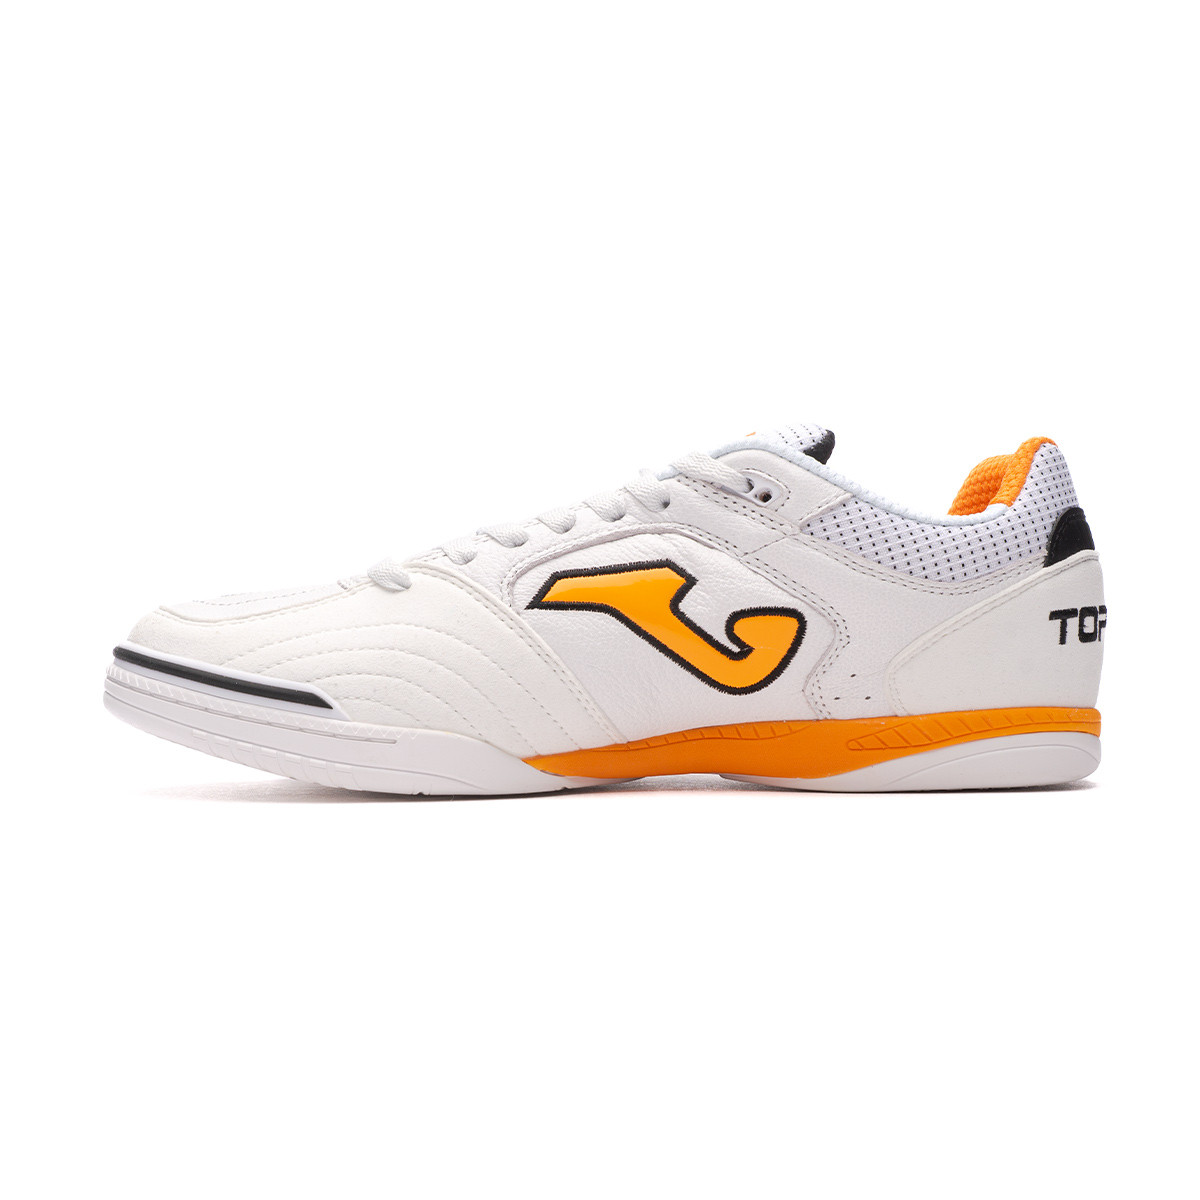 Joma shoes Soccer Turf Top Flex 942 Topw .942.tf White/Orange August 2019 